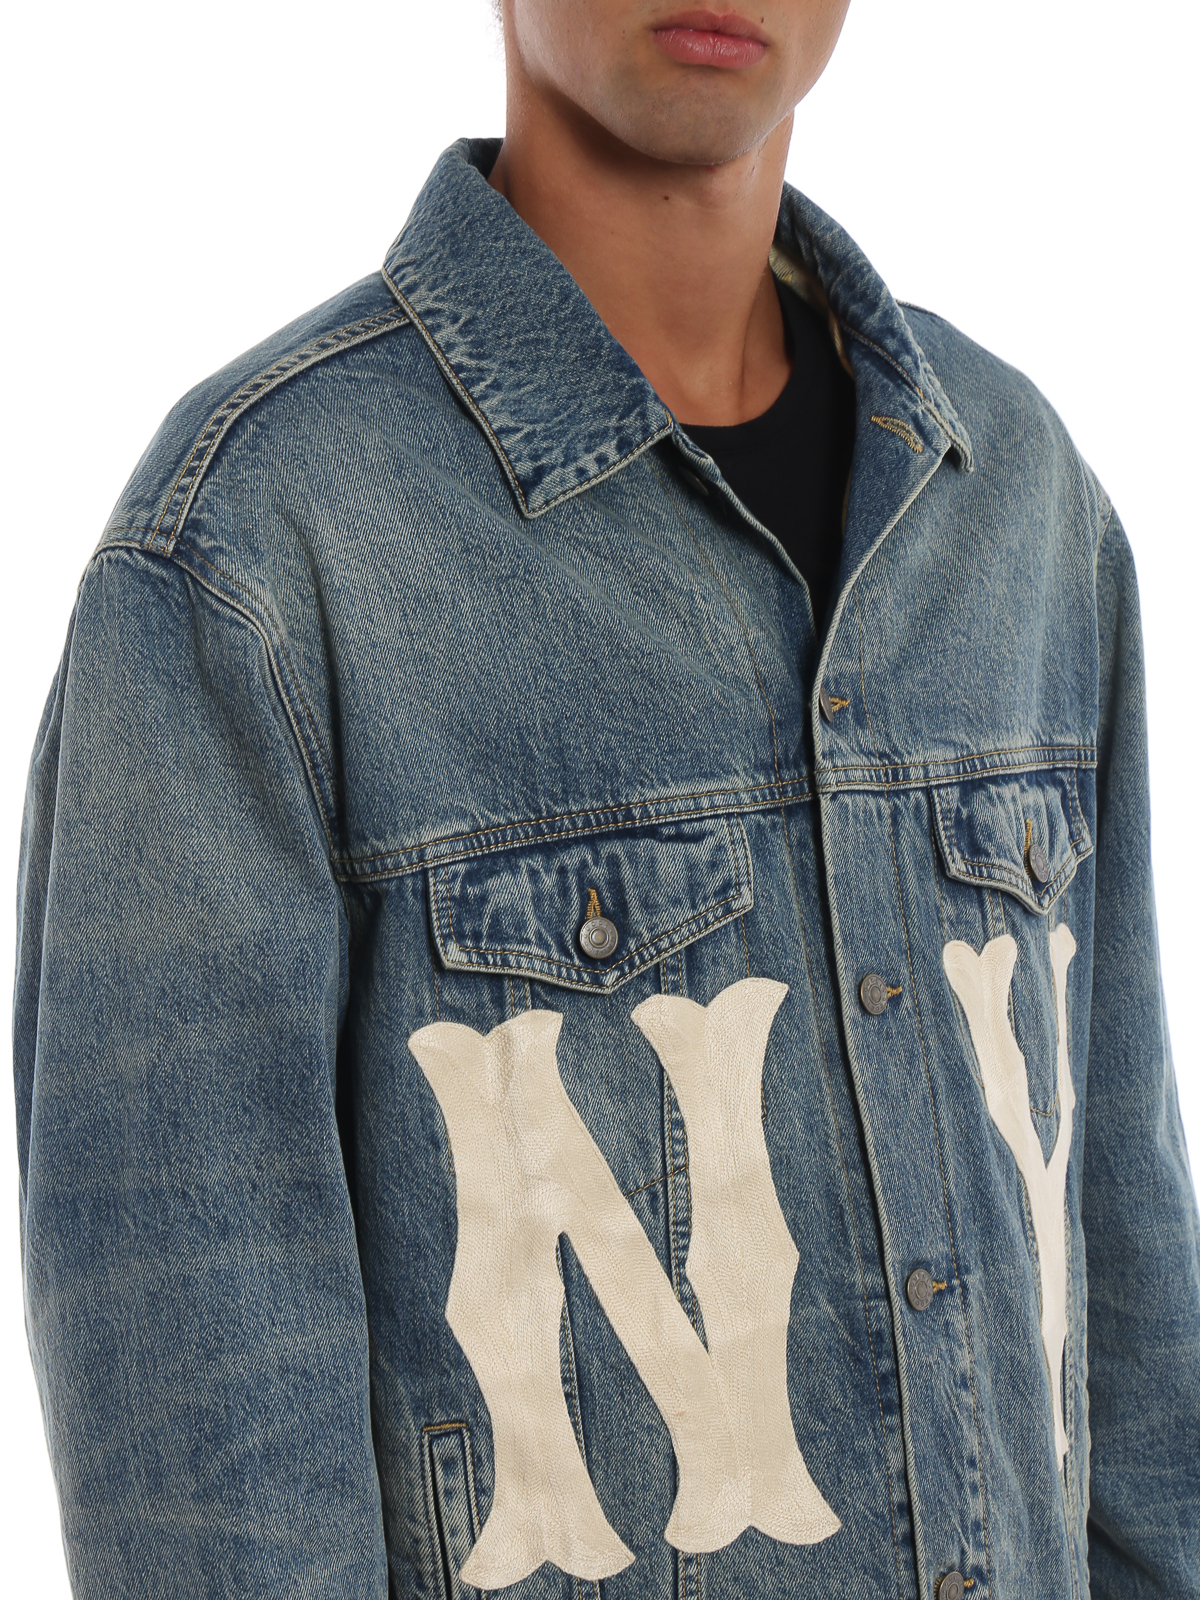 gucci new york yankees jacket